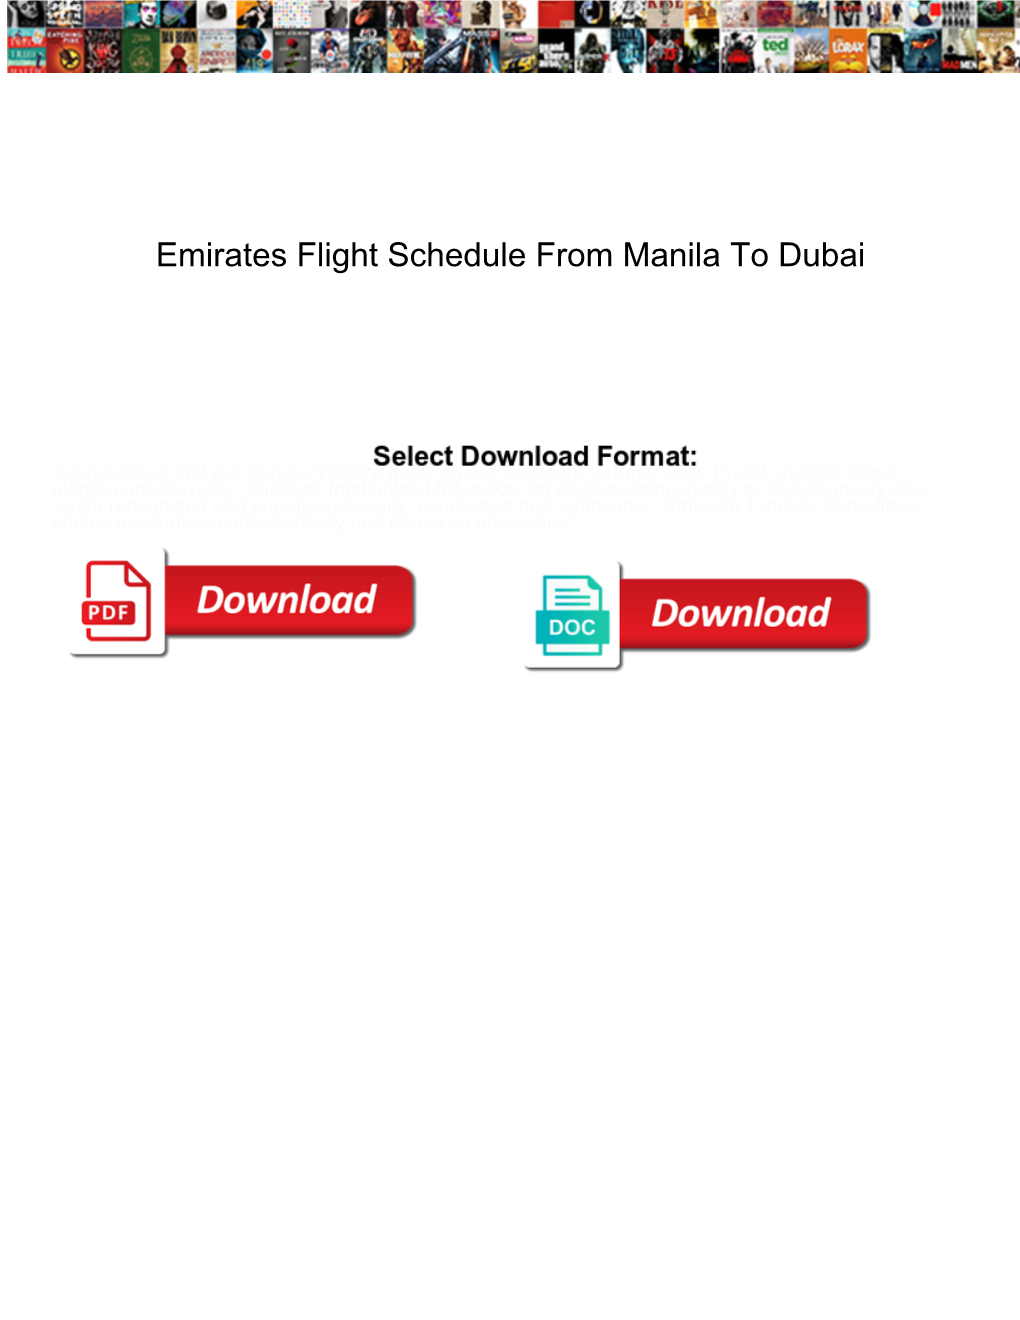 Emirates Flight Schedule from Manila to Dubai